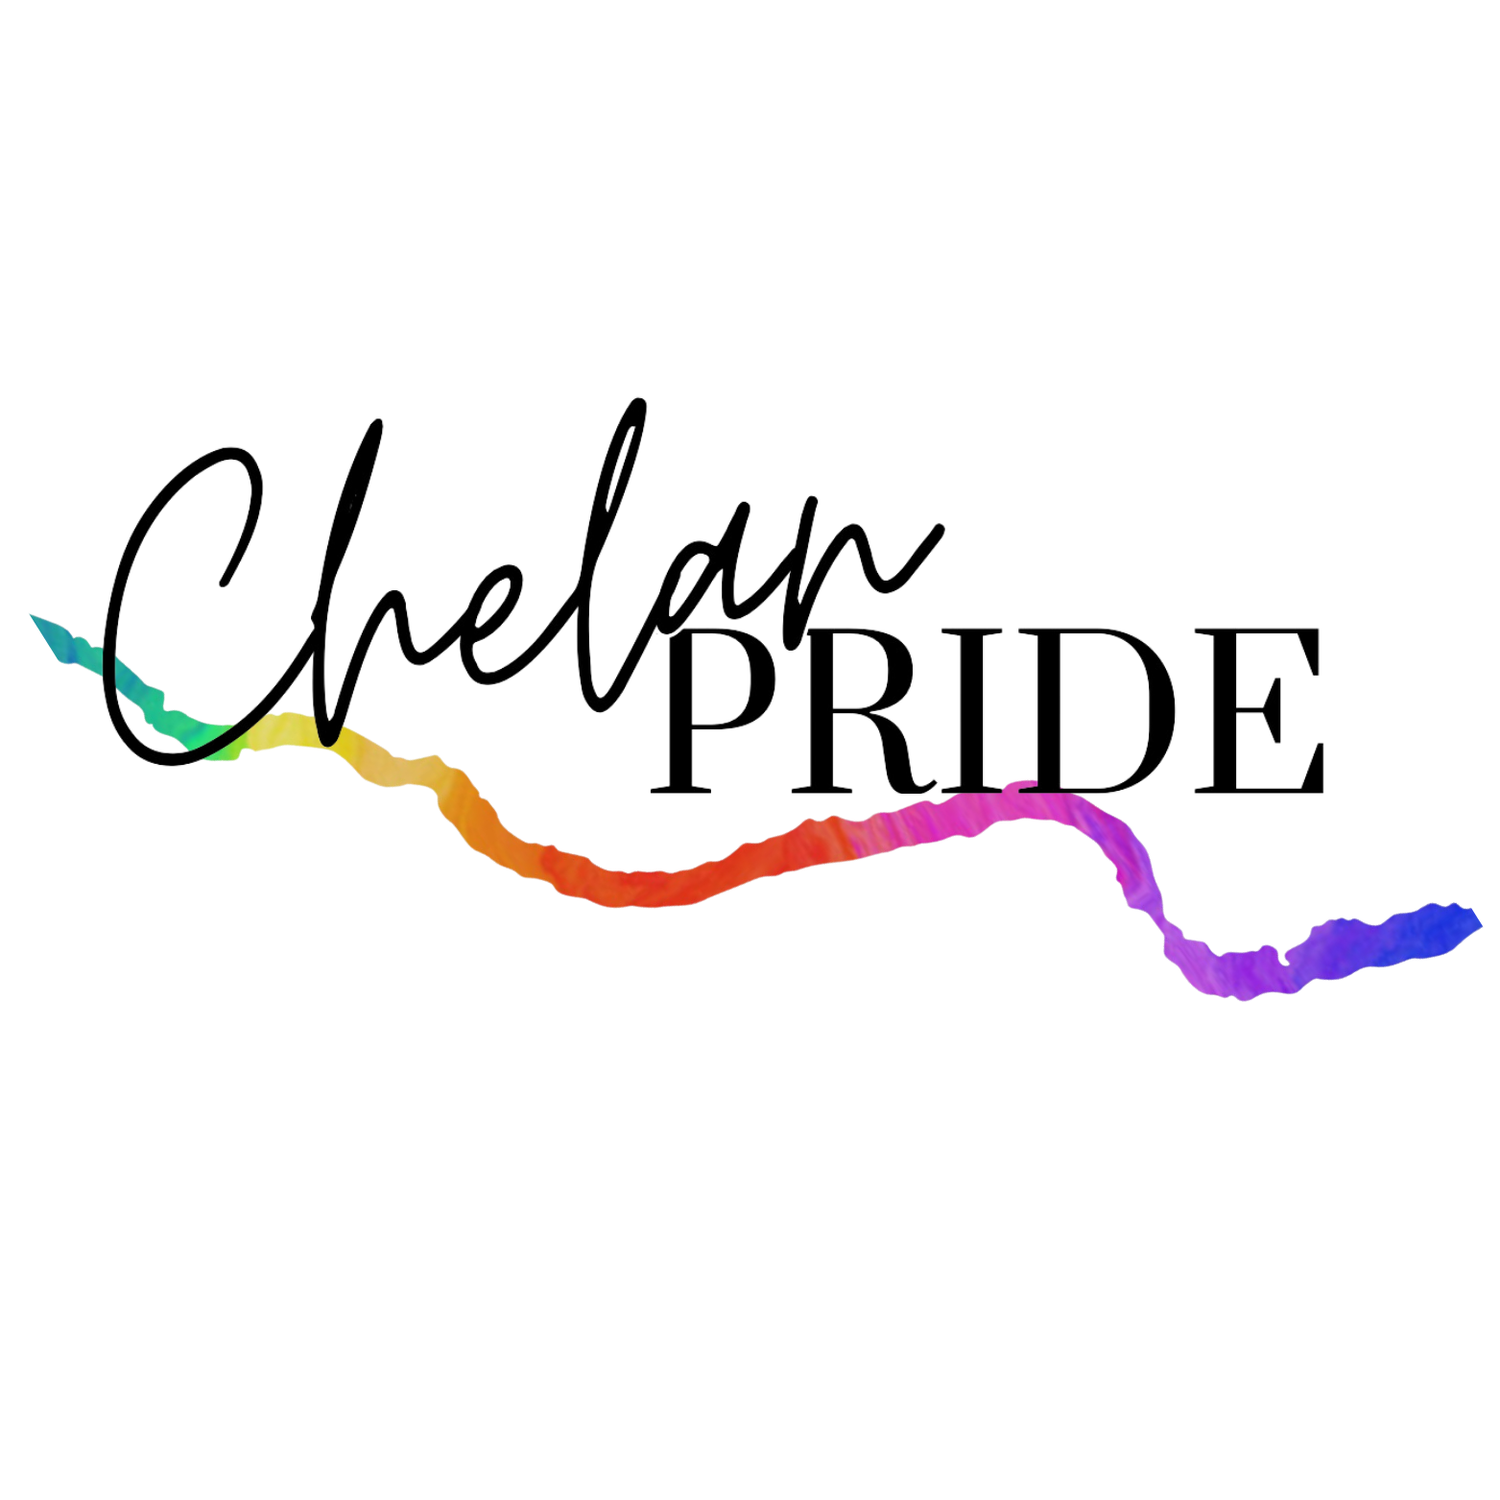 Chelan Pride